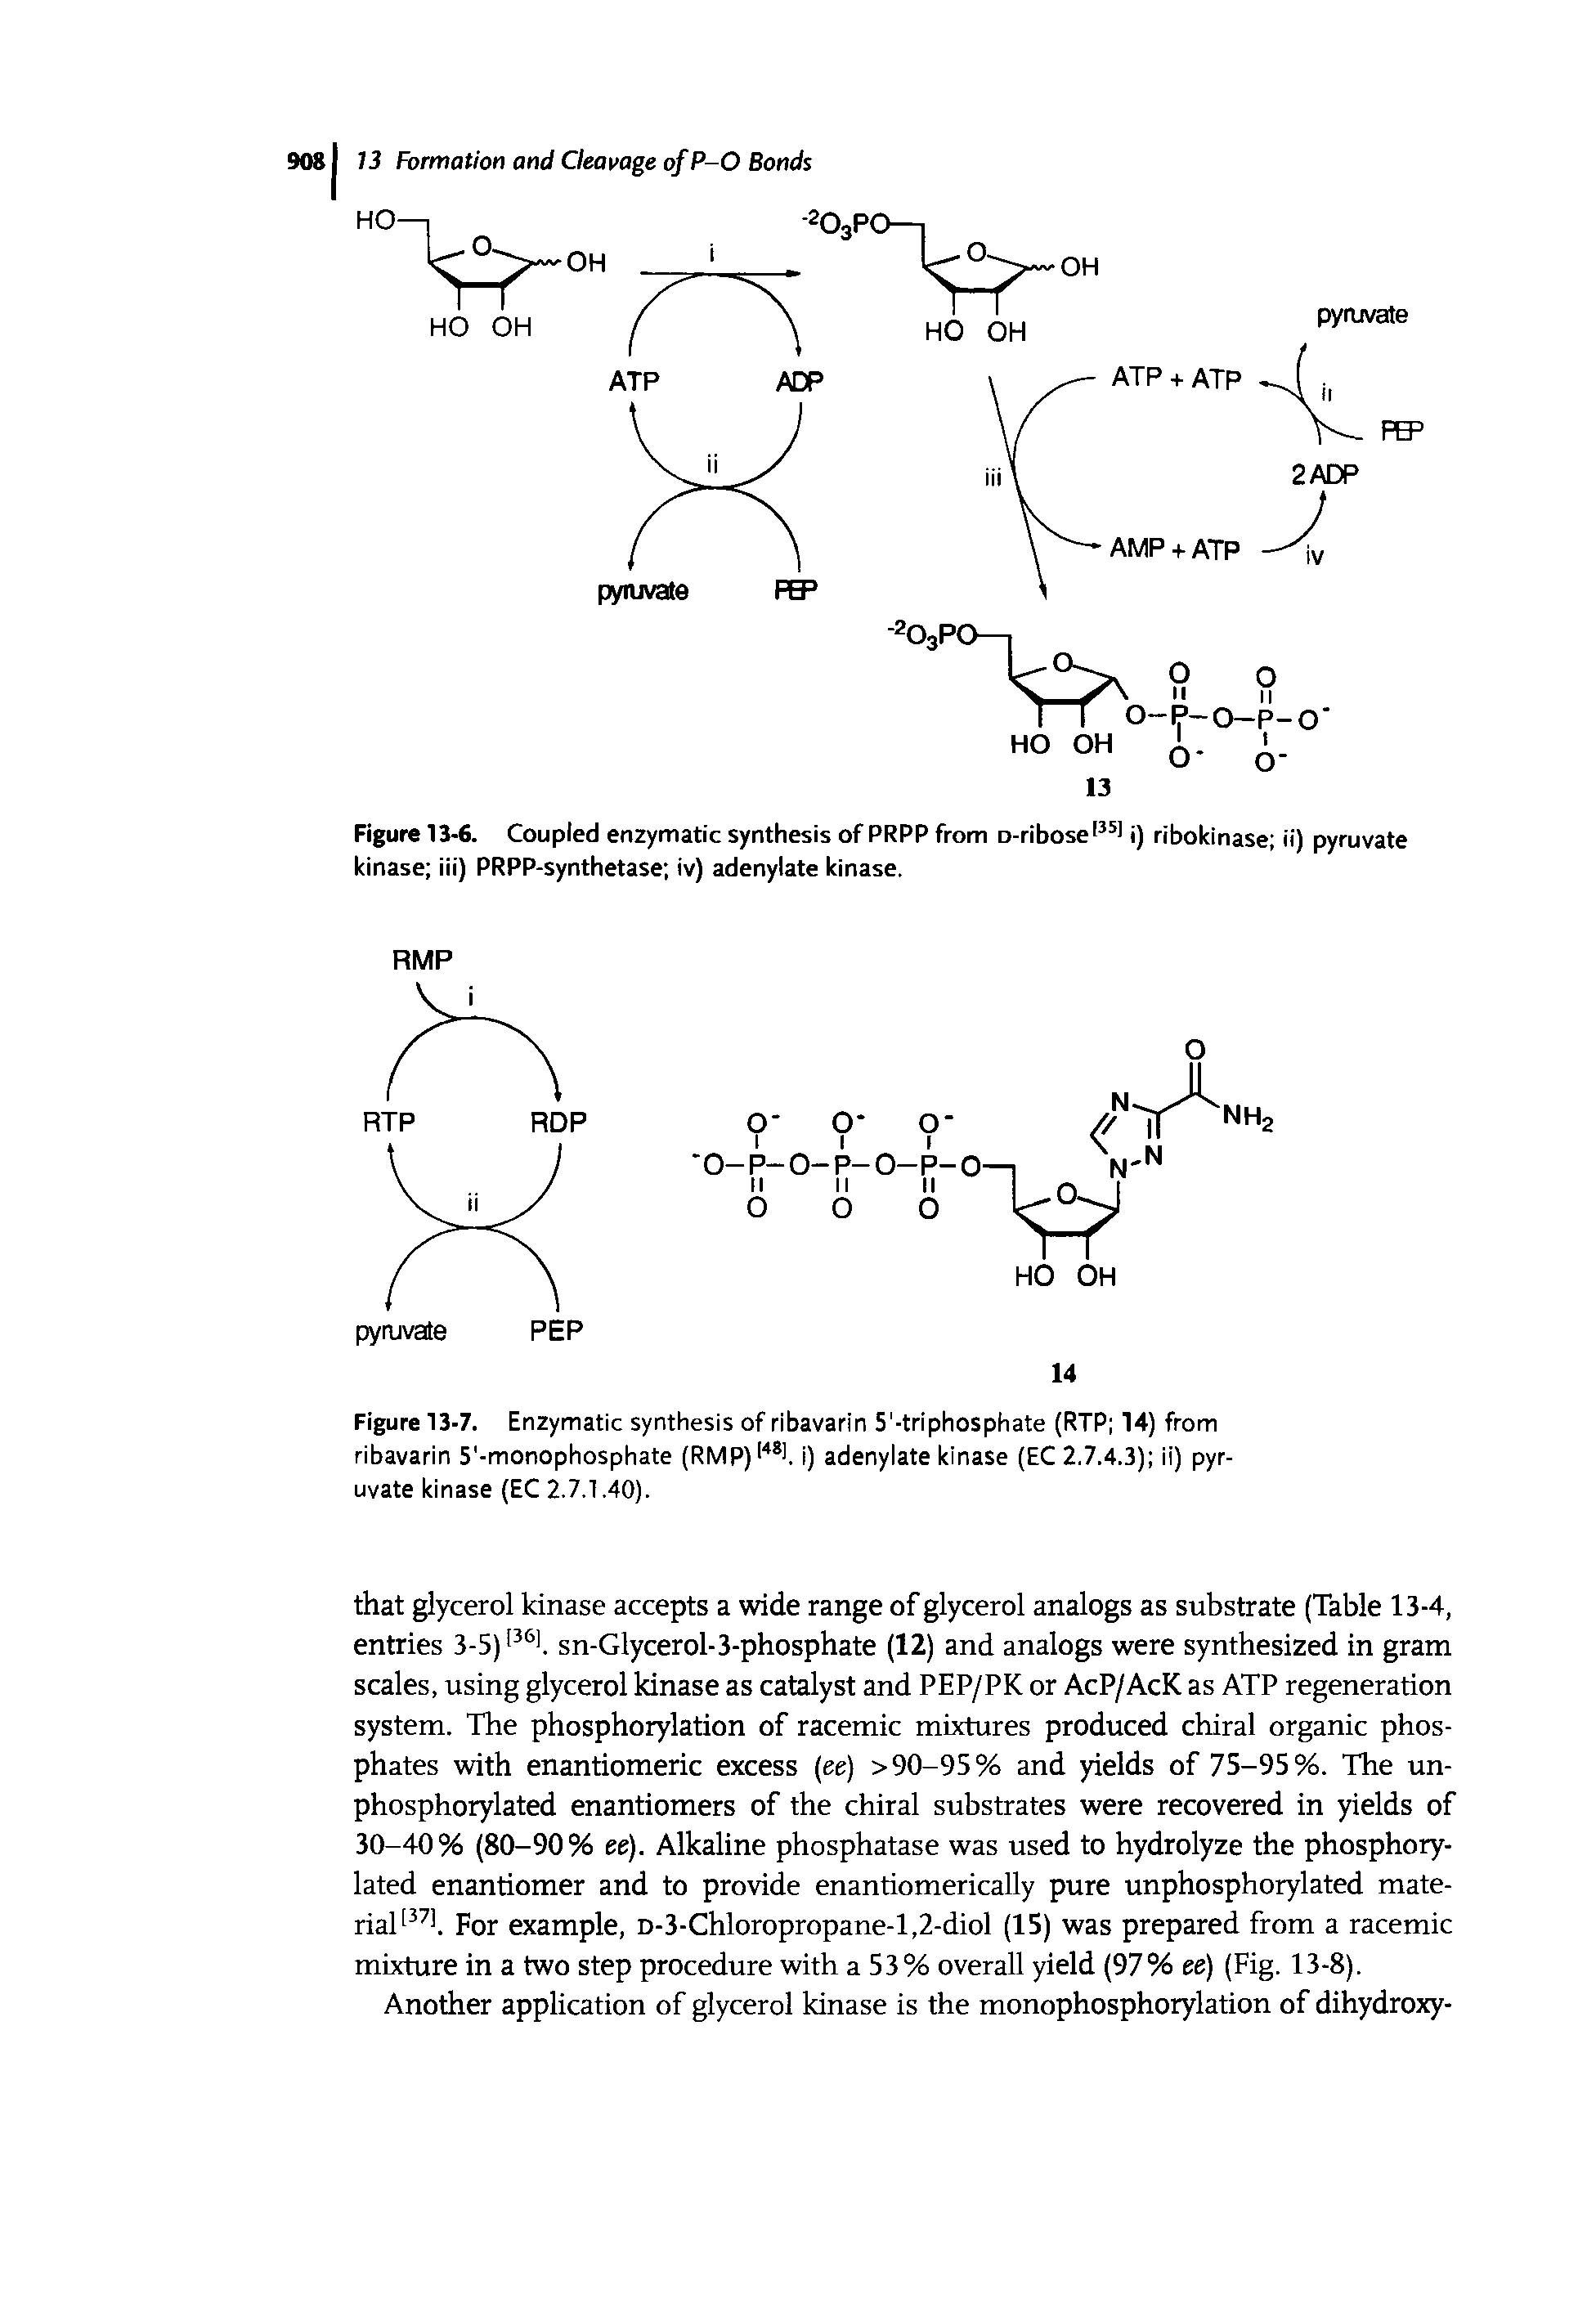 Figure 13-6. Coupled enzymatic synthesis of PRPP from D-ribose 351 i) ribokinase it) pyruvate kinase iii) PRPP-synthetase iv) adenylate kinase.